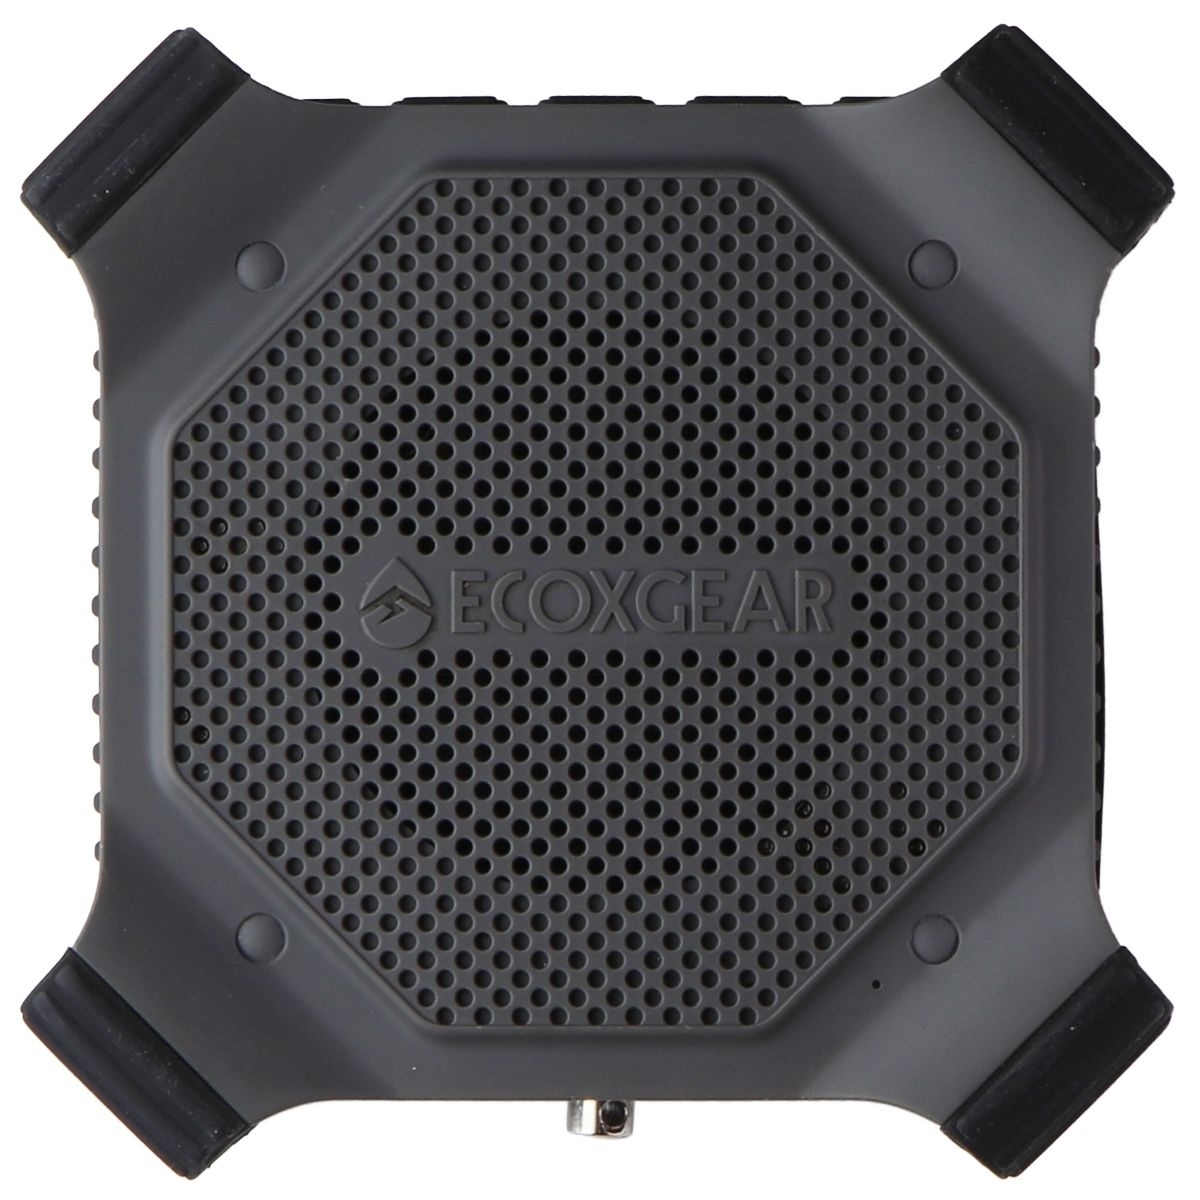 ECOXGEAR EcoEdge+ Waterproof Bluetooth LED Lit Speaker - Gray (Very Good) - image 4 of 5